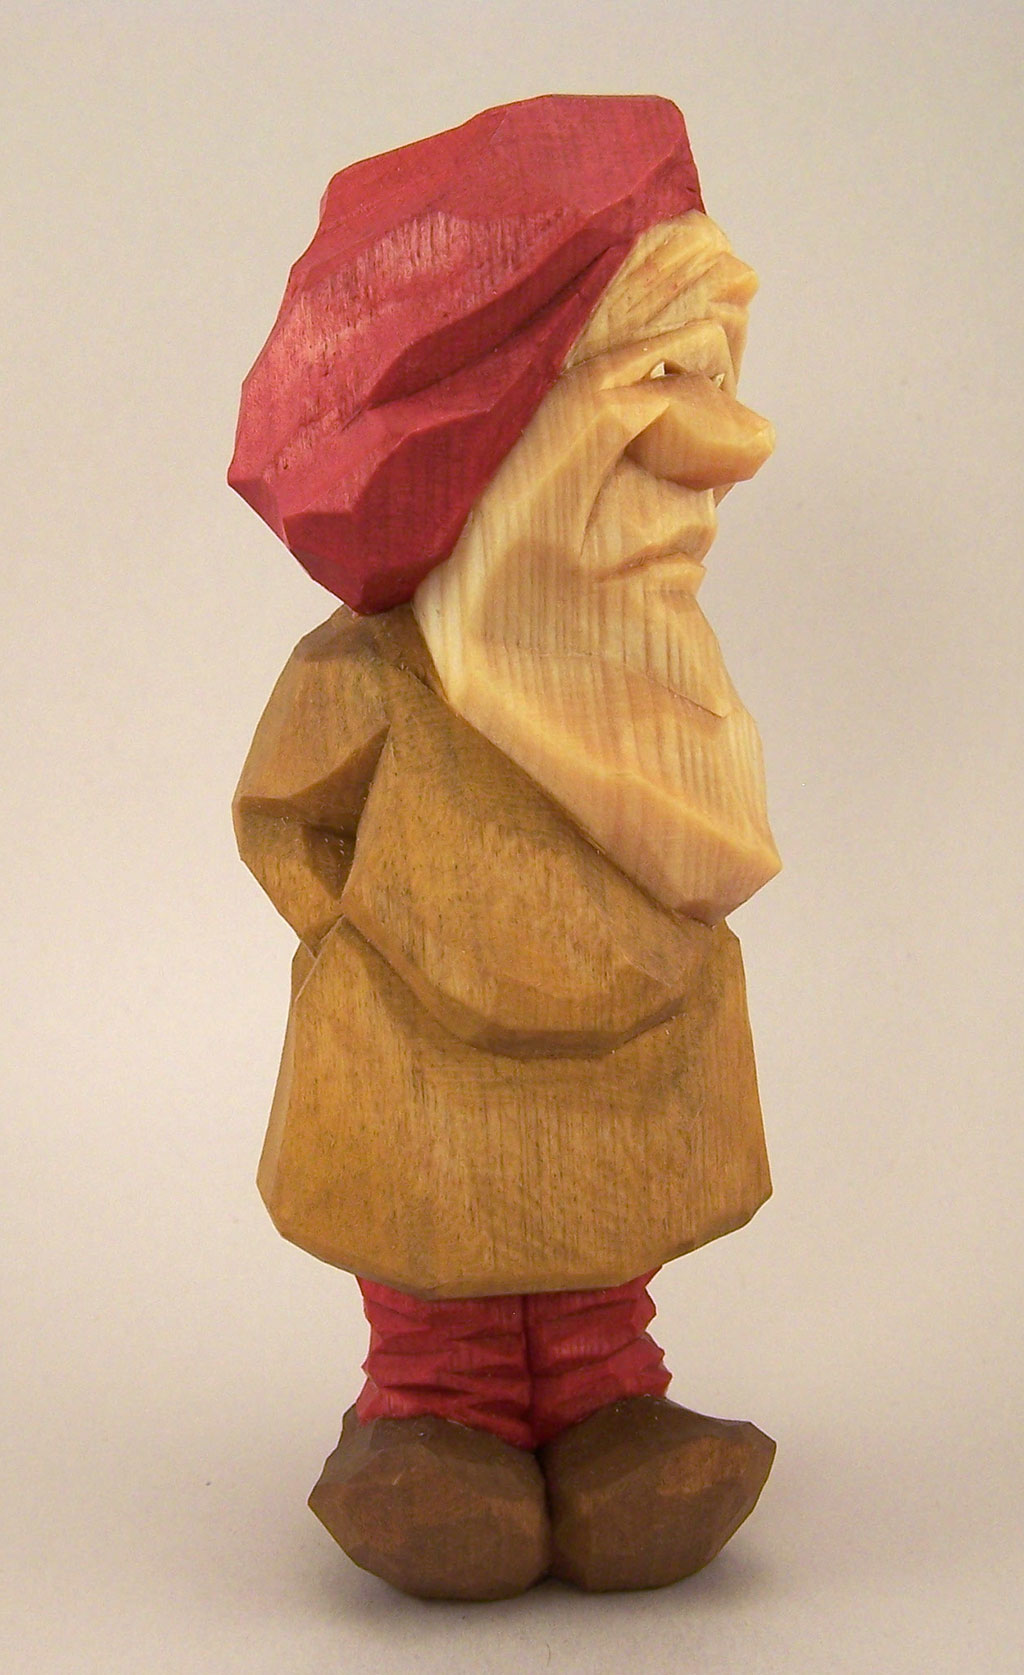 Harley Refsal, Tomte, 2013, wood sculpture figurine